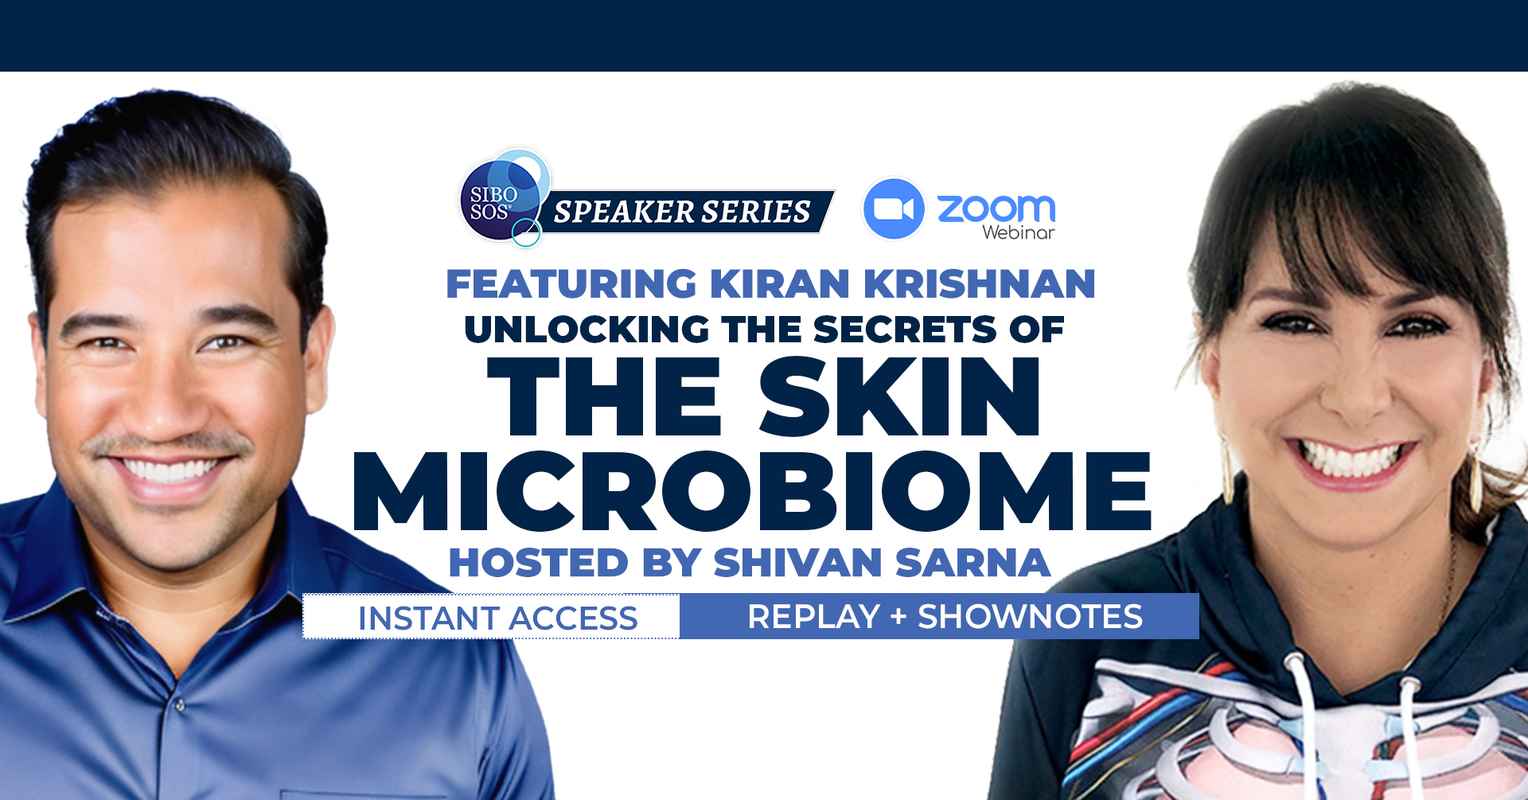 Kiran Krishnan Event Cover - Instant Access